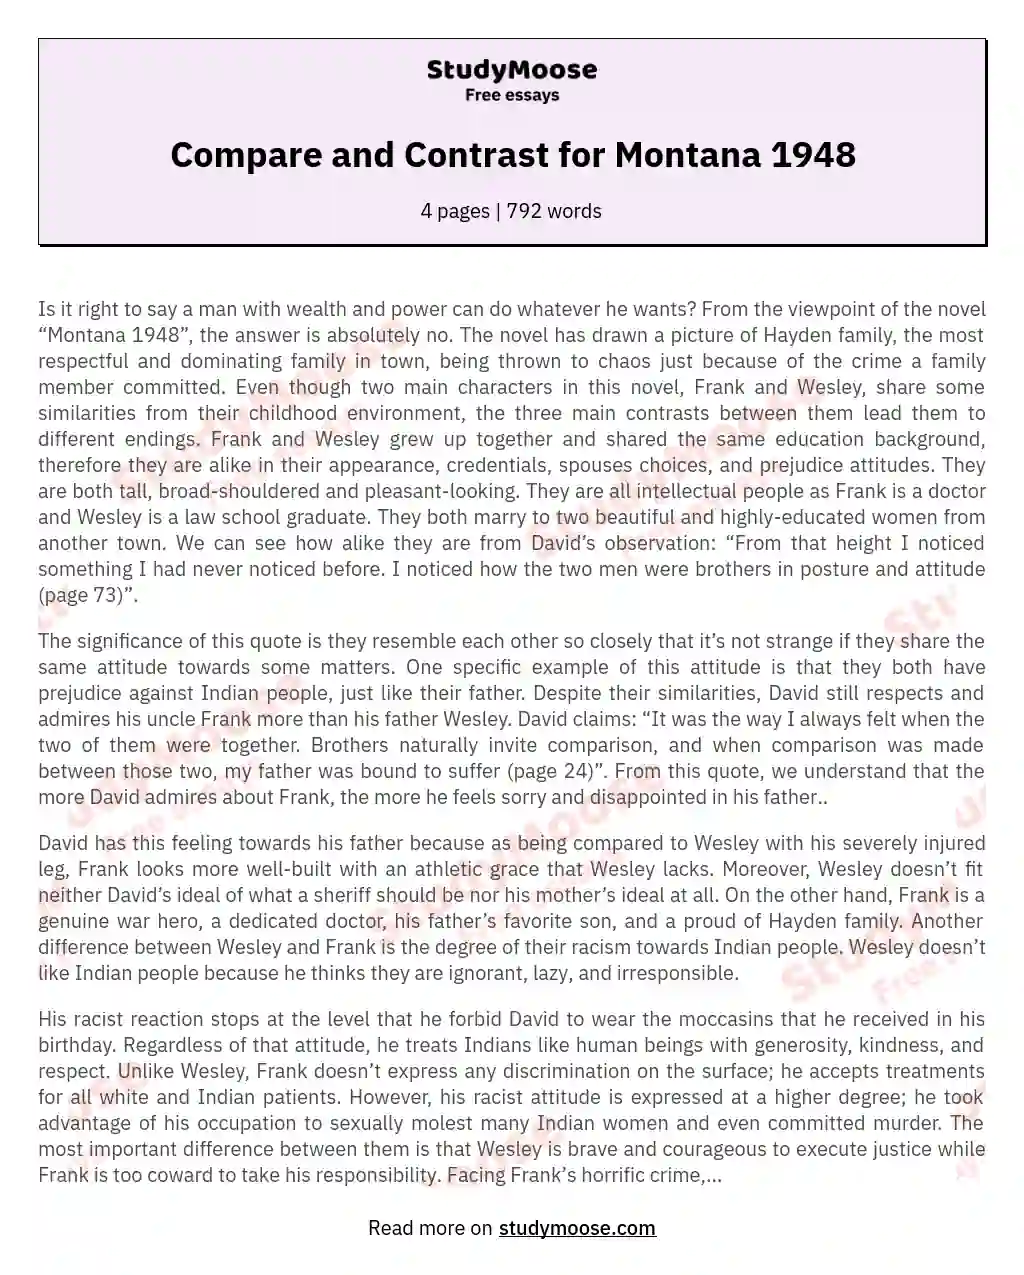 Compare and Contrast for Montana 1948 essay